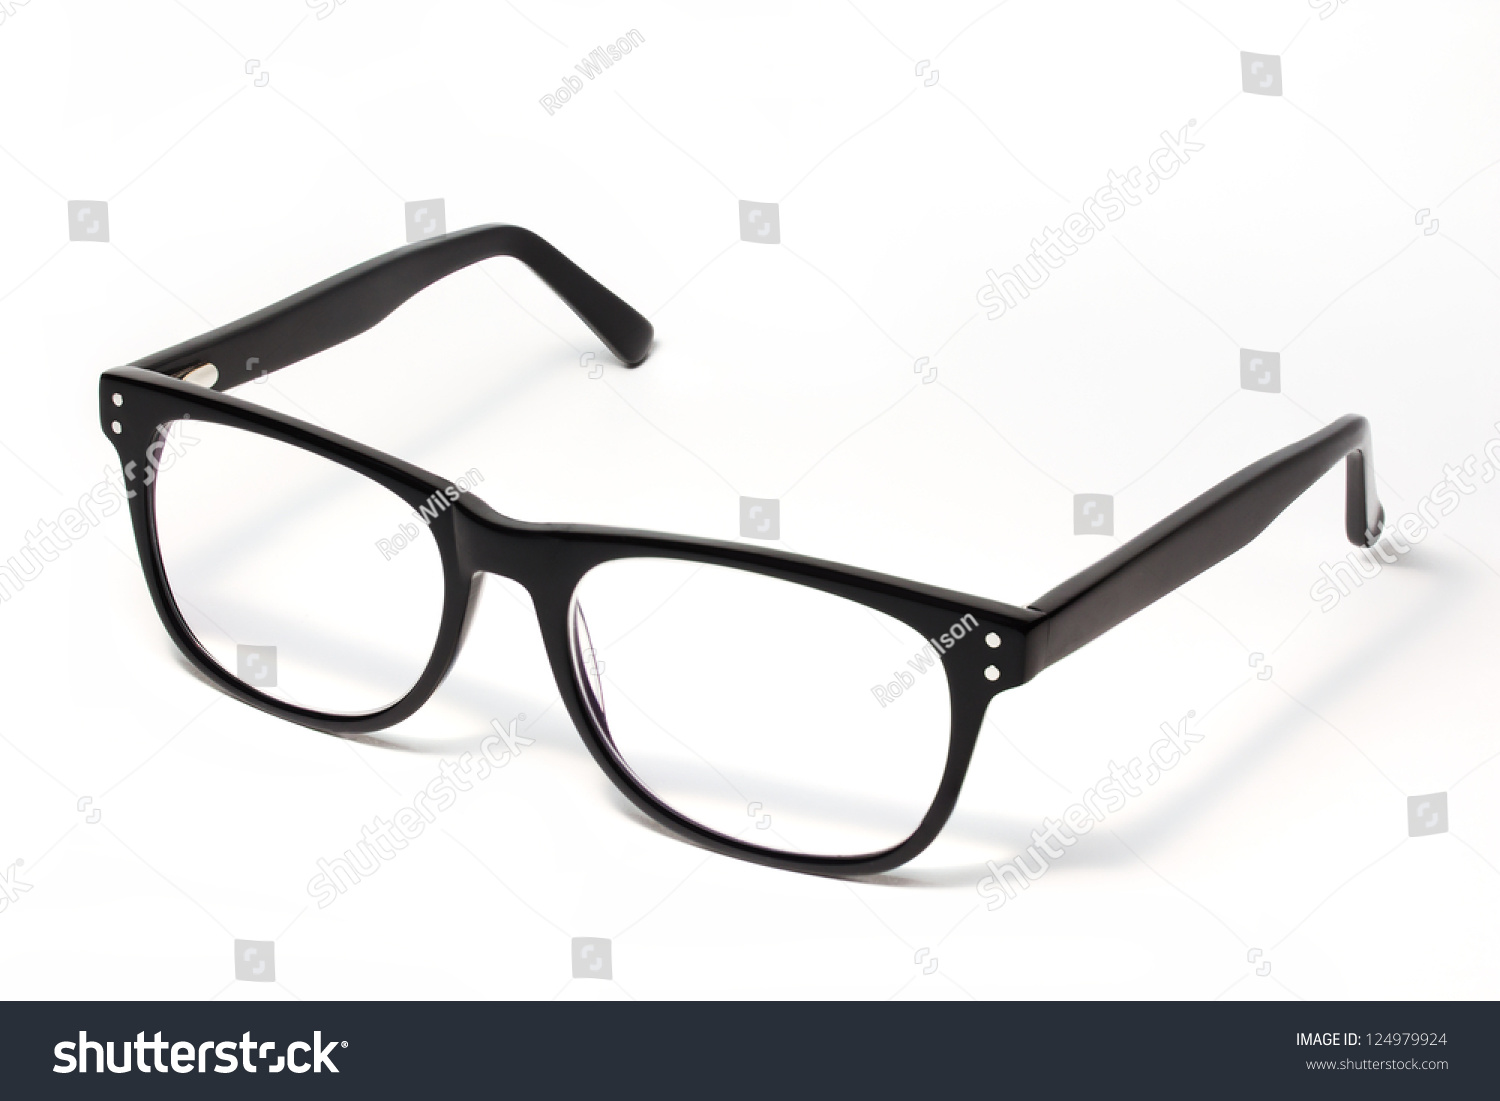 Black Eye Glasses Isolated on White #124979924